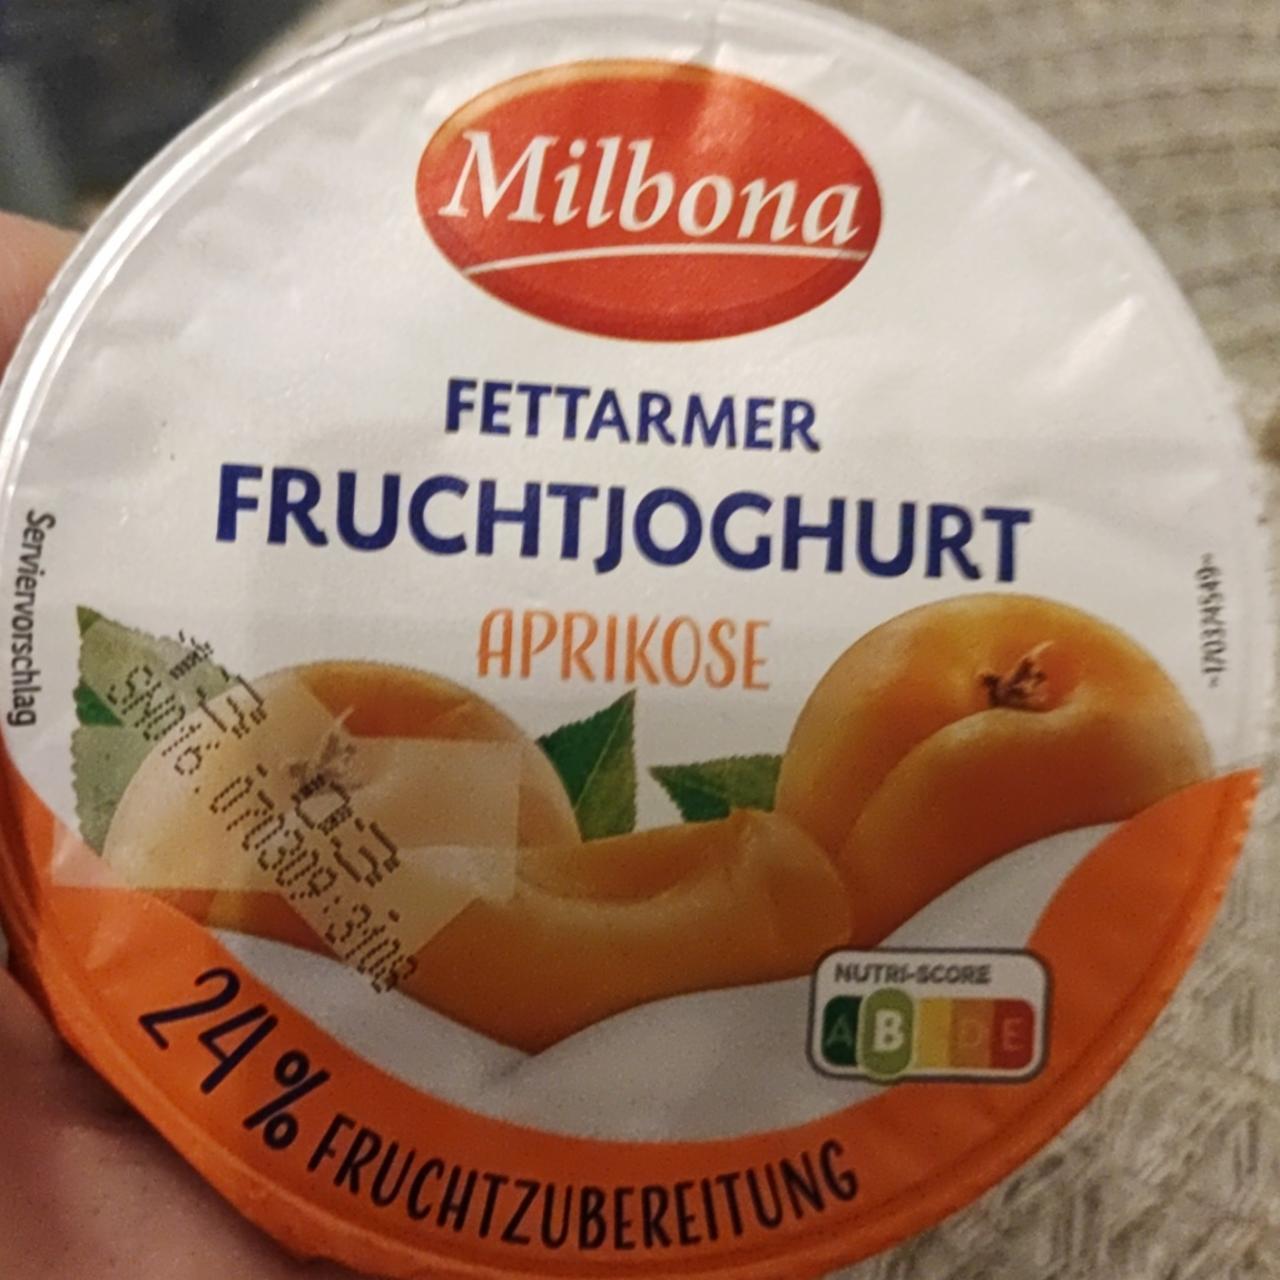 Képek - Apricot Yogurt Milbona